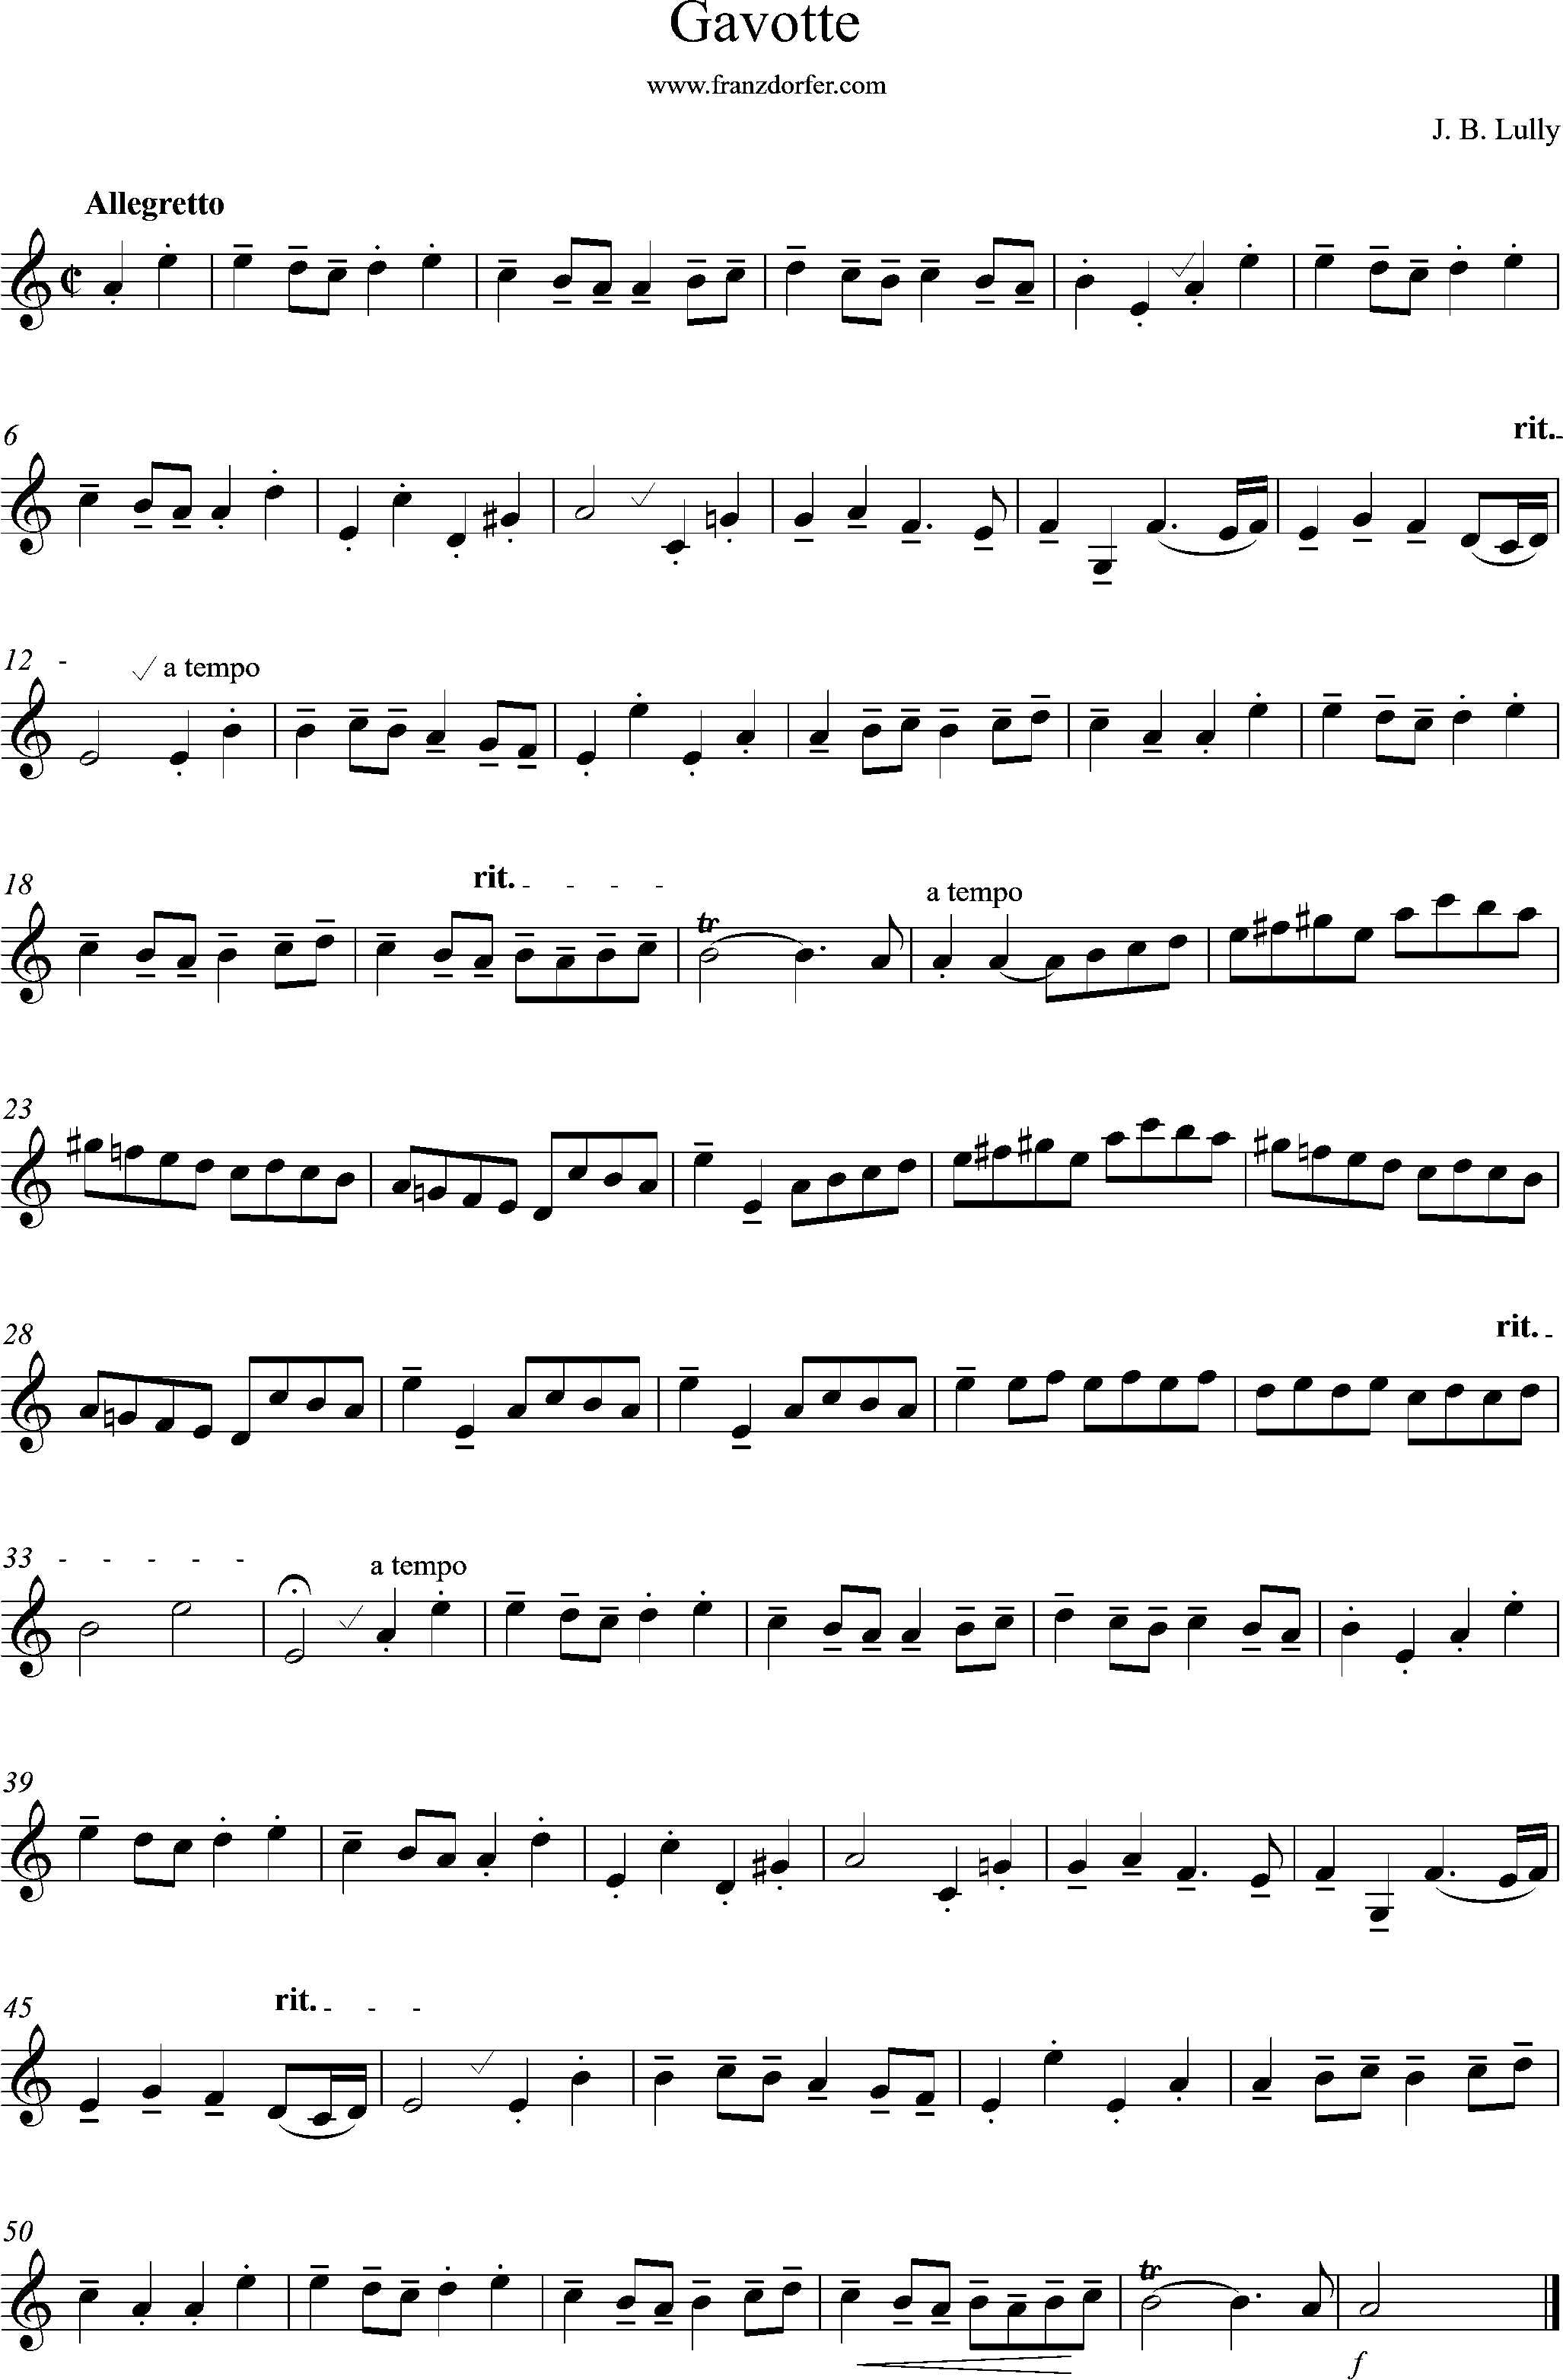 Violoncello- Gavotte Lully- dm, Bass Clef